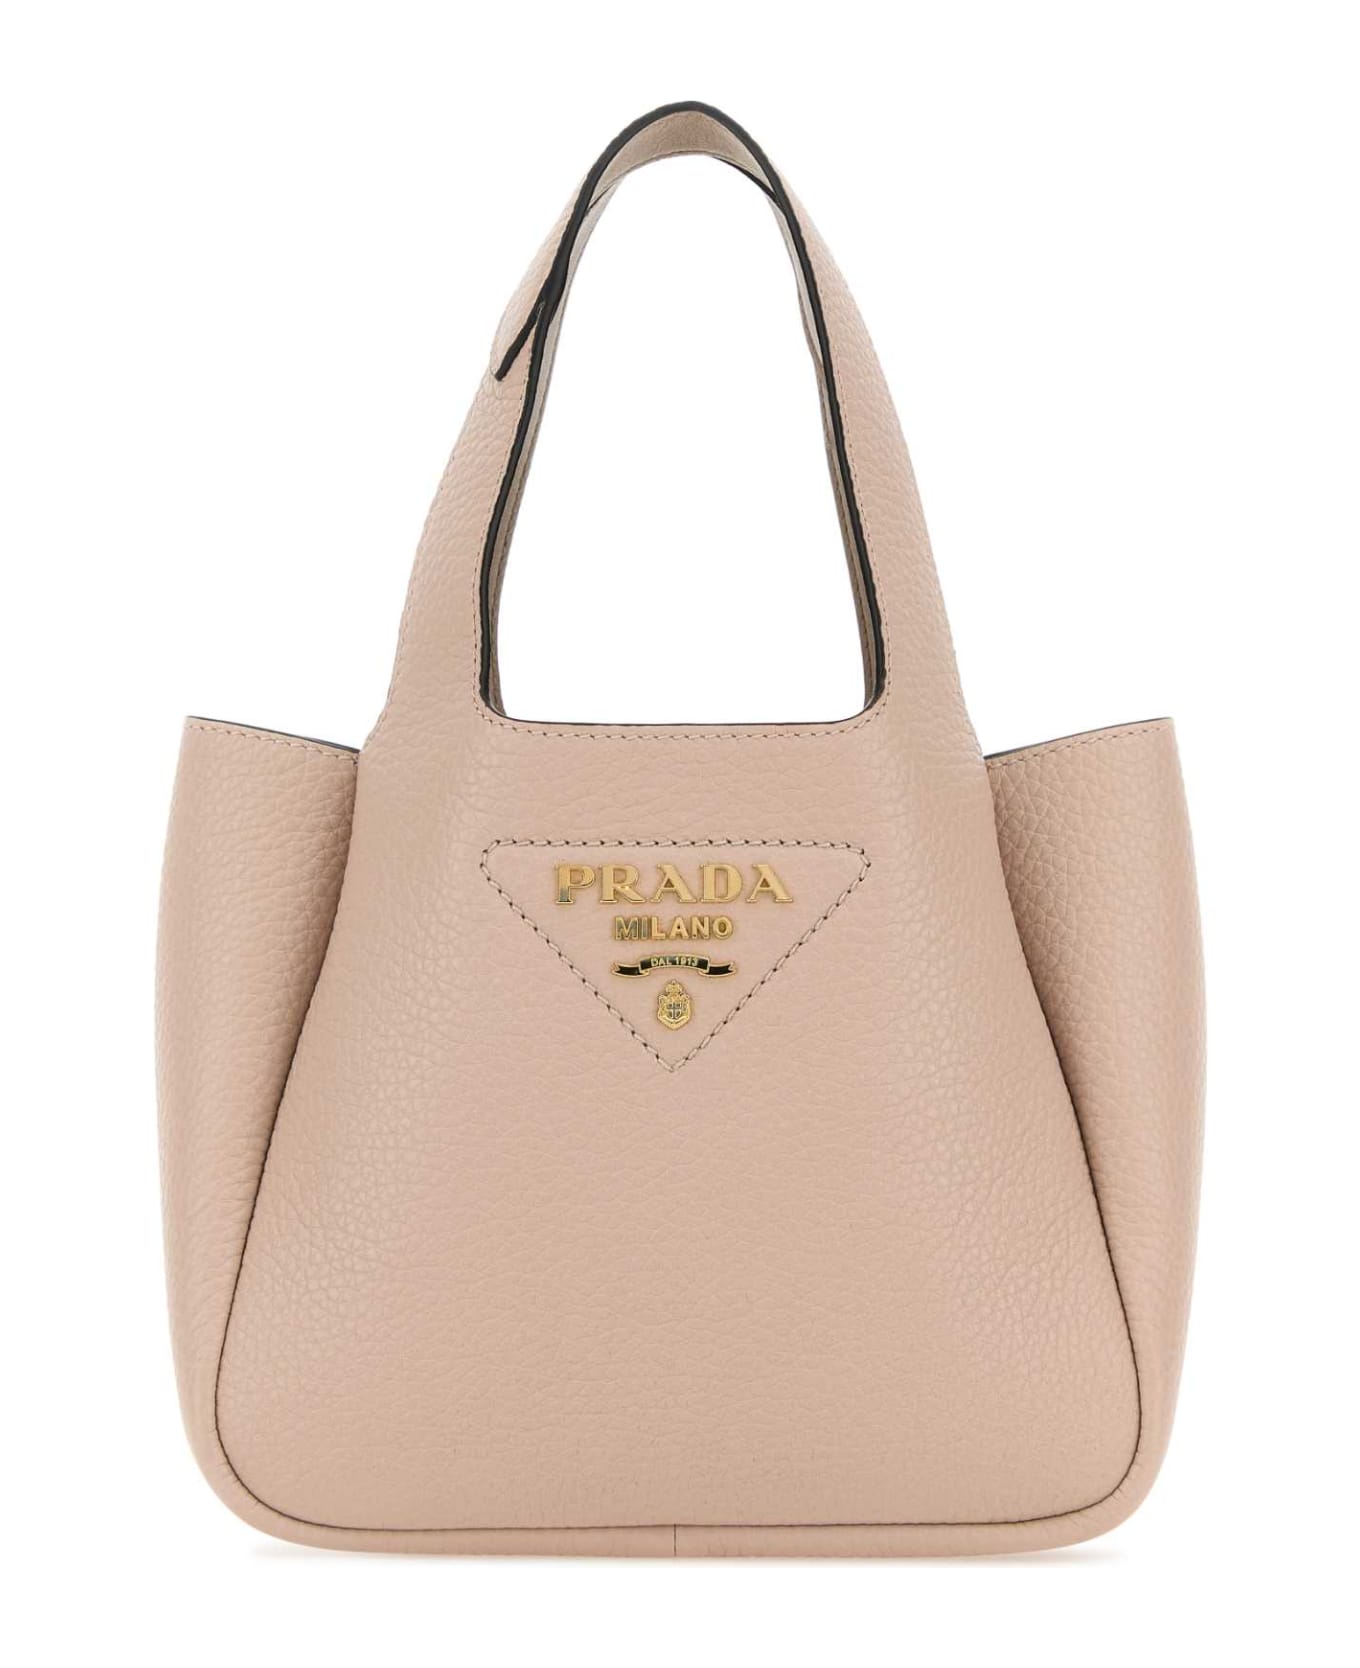 Prada Light Pink Leather Handbag - NINFEA1N